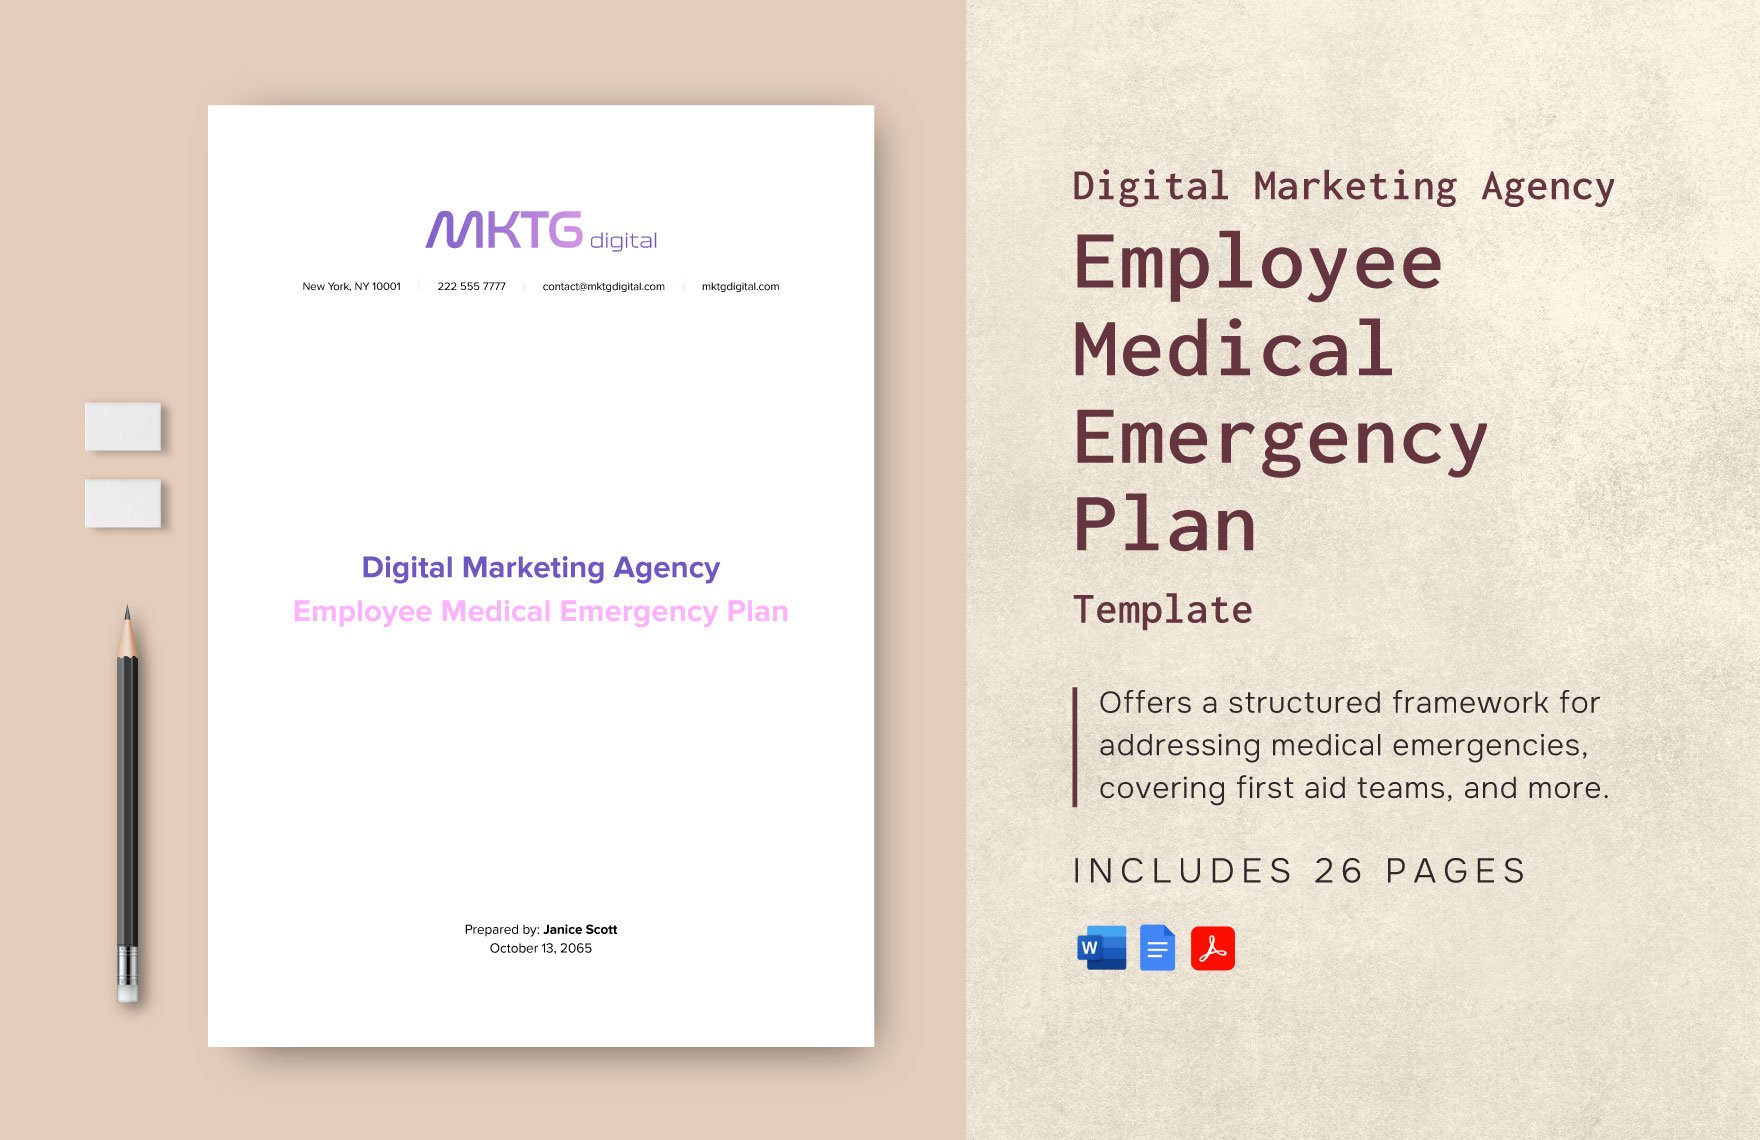 Digital Marketing Agency Employee Medical Emergency Plan Template